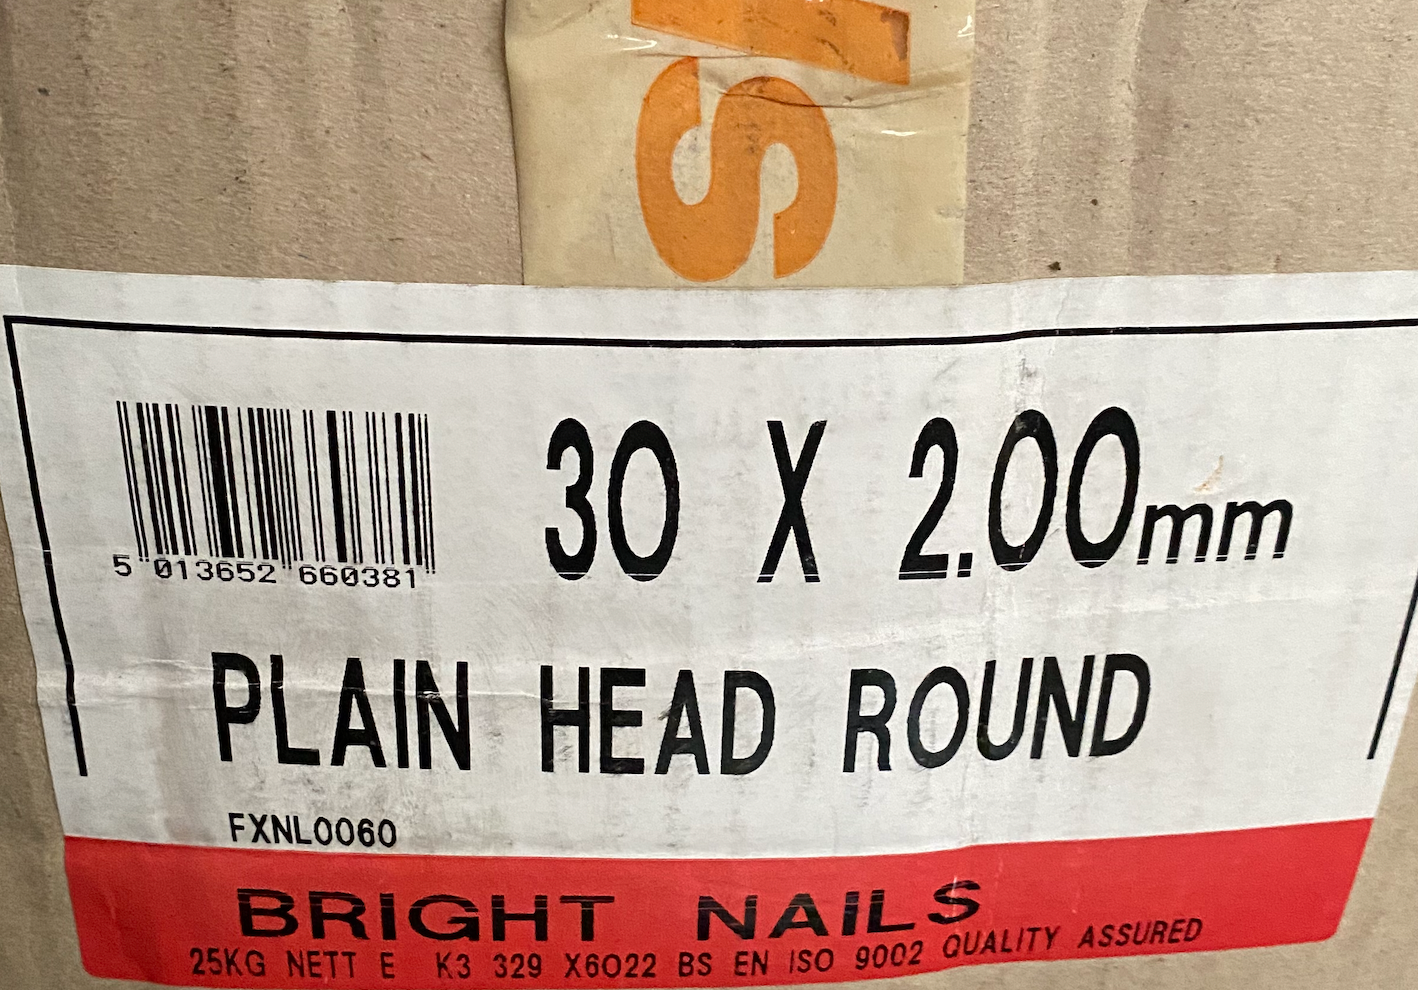 Rynails 1 kg   30 x 2.00mm Bright Plain Head Round Nails  British